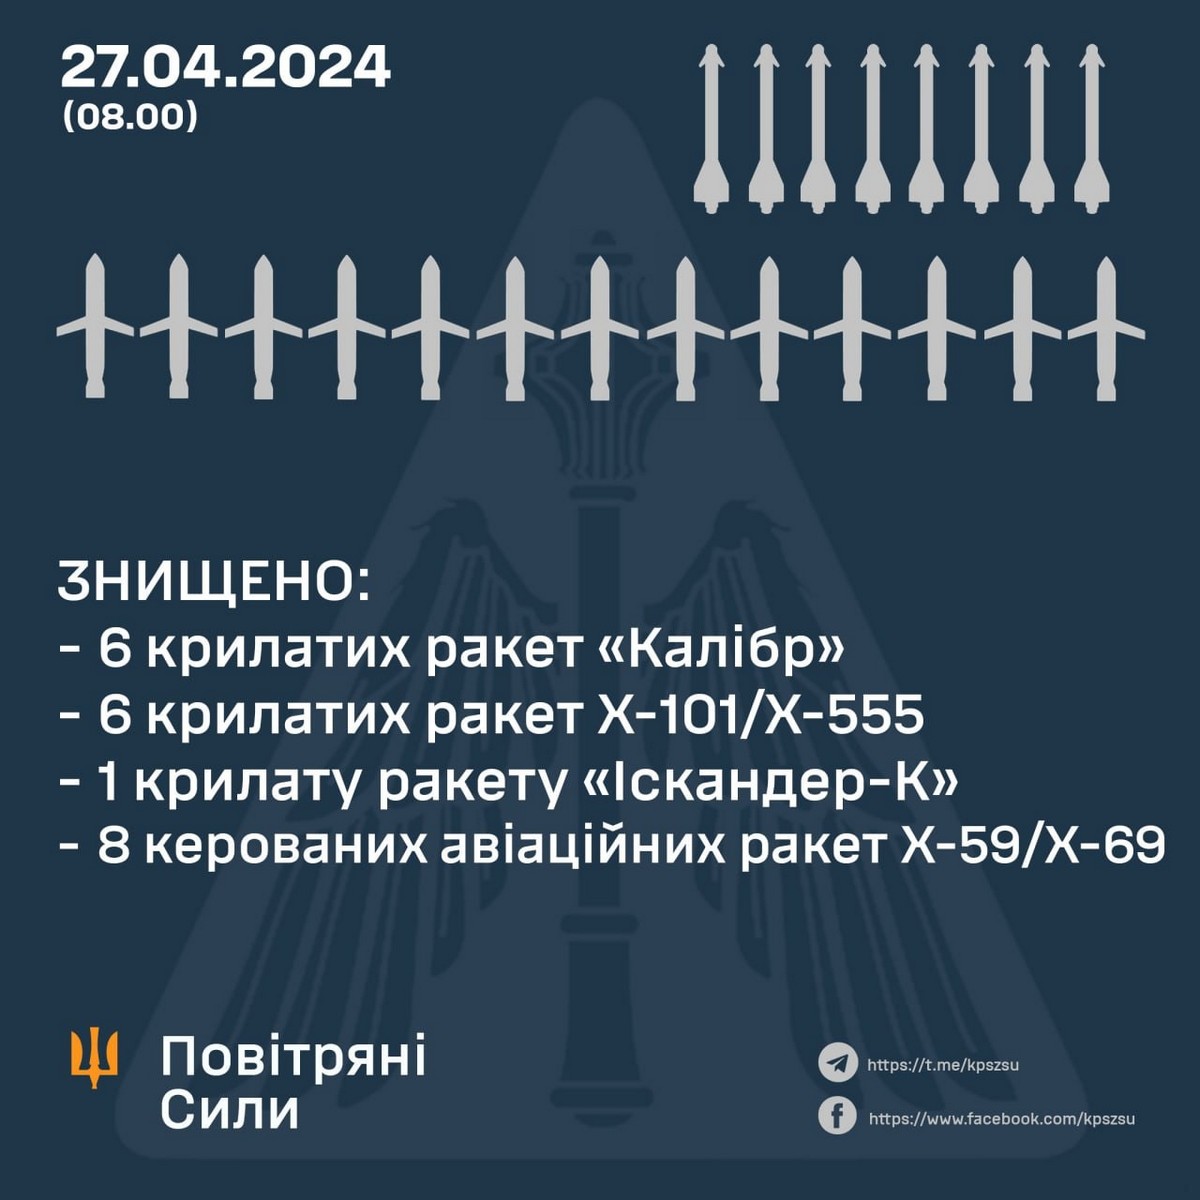 Масована ракетна атака по Україні 27 квітня – скільки цілей збила ППО